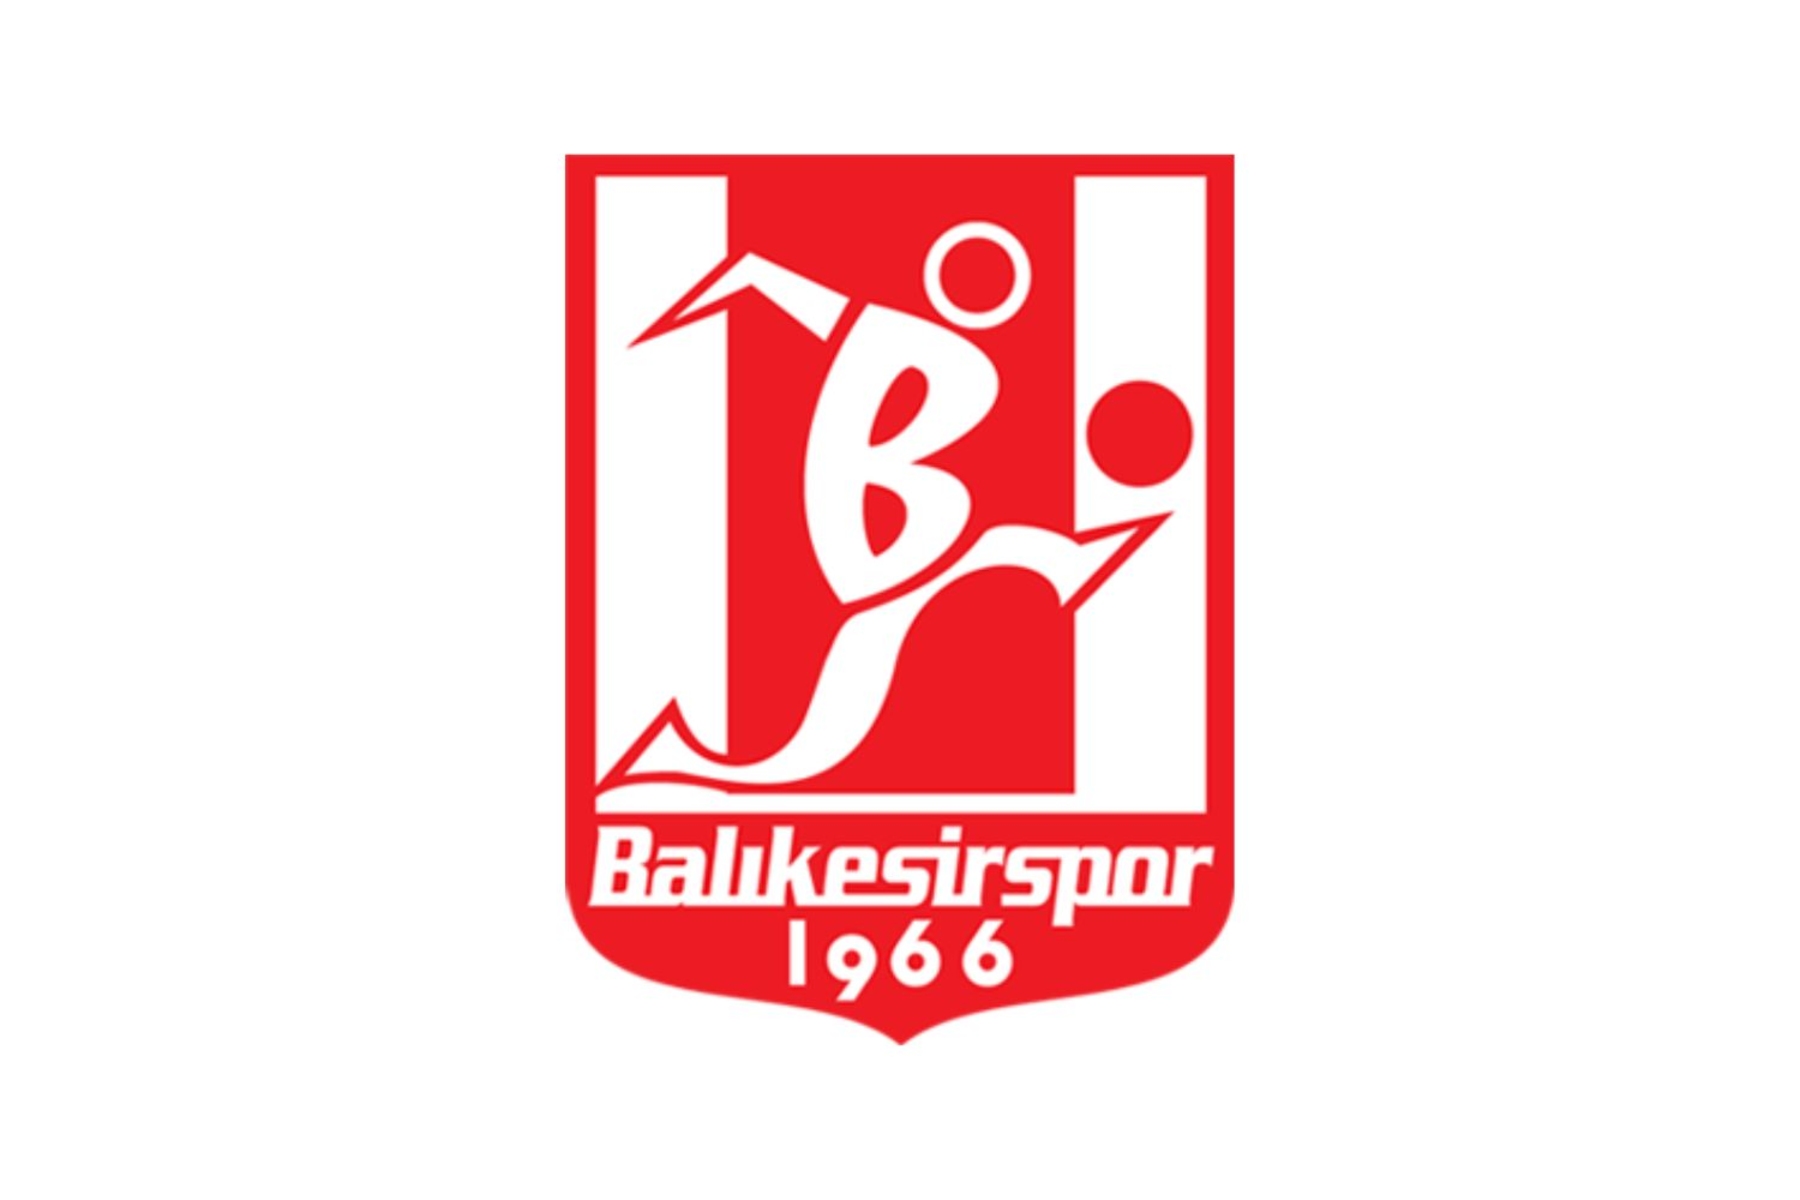 balikesirspor-24-football-club-facts